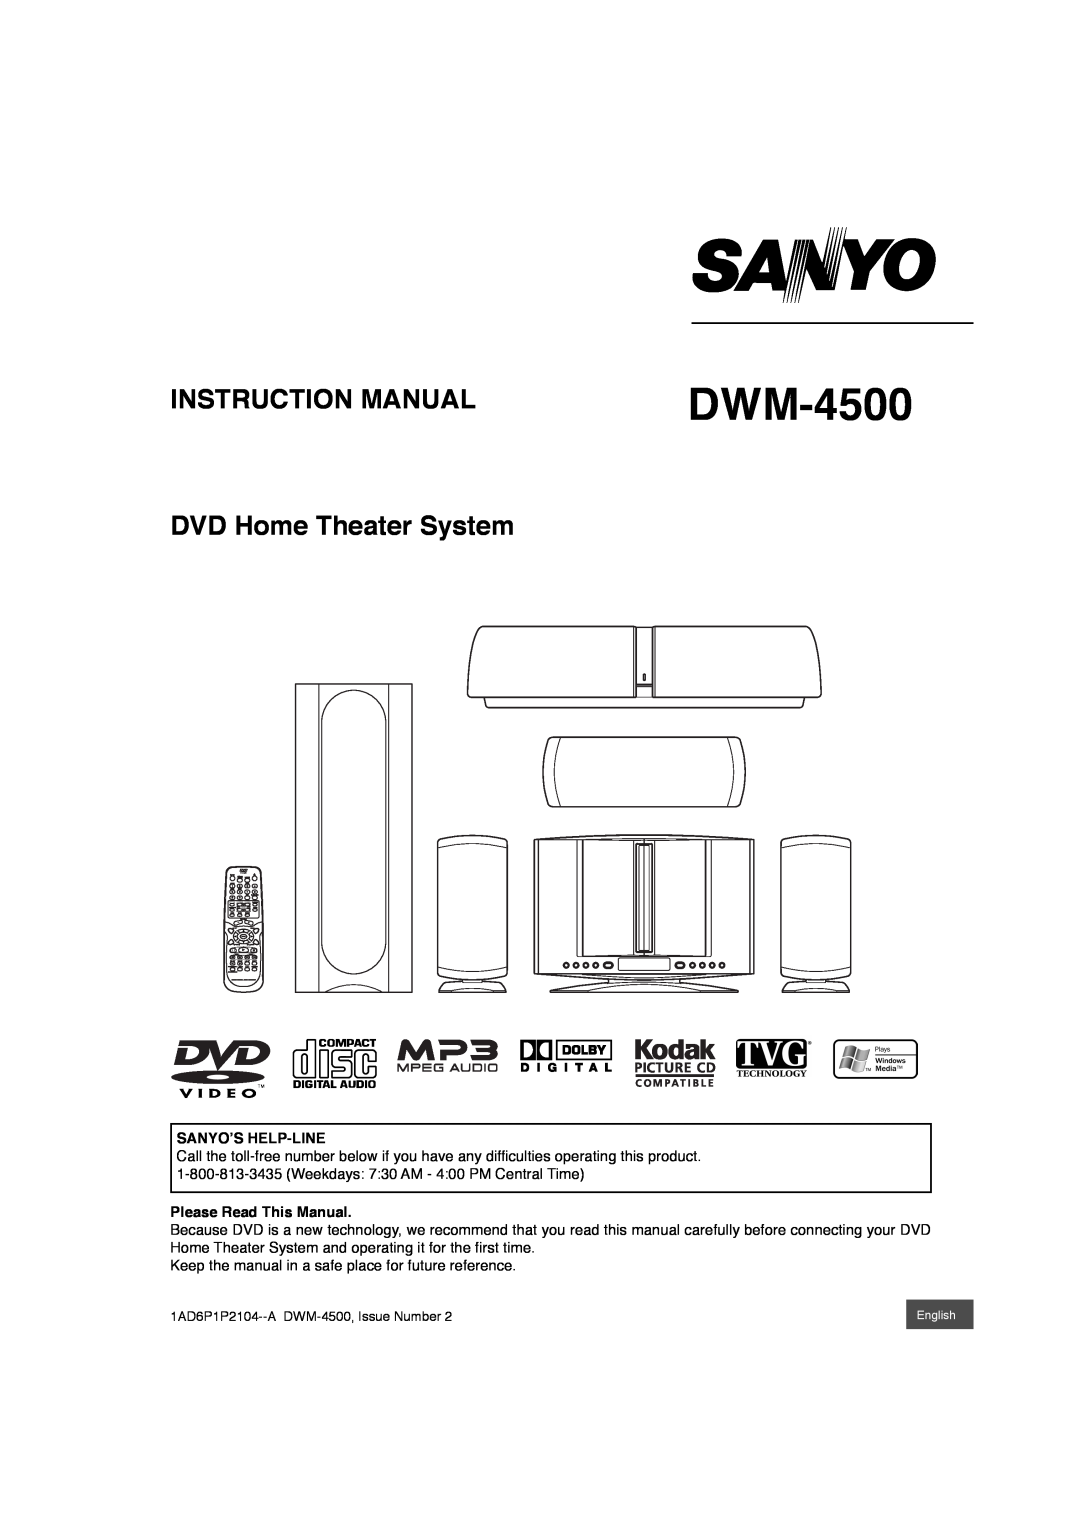 Sanyo DWM-4500 instruction manual DVD Home Theater System 